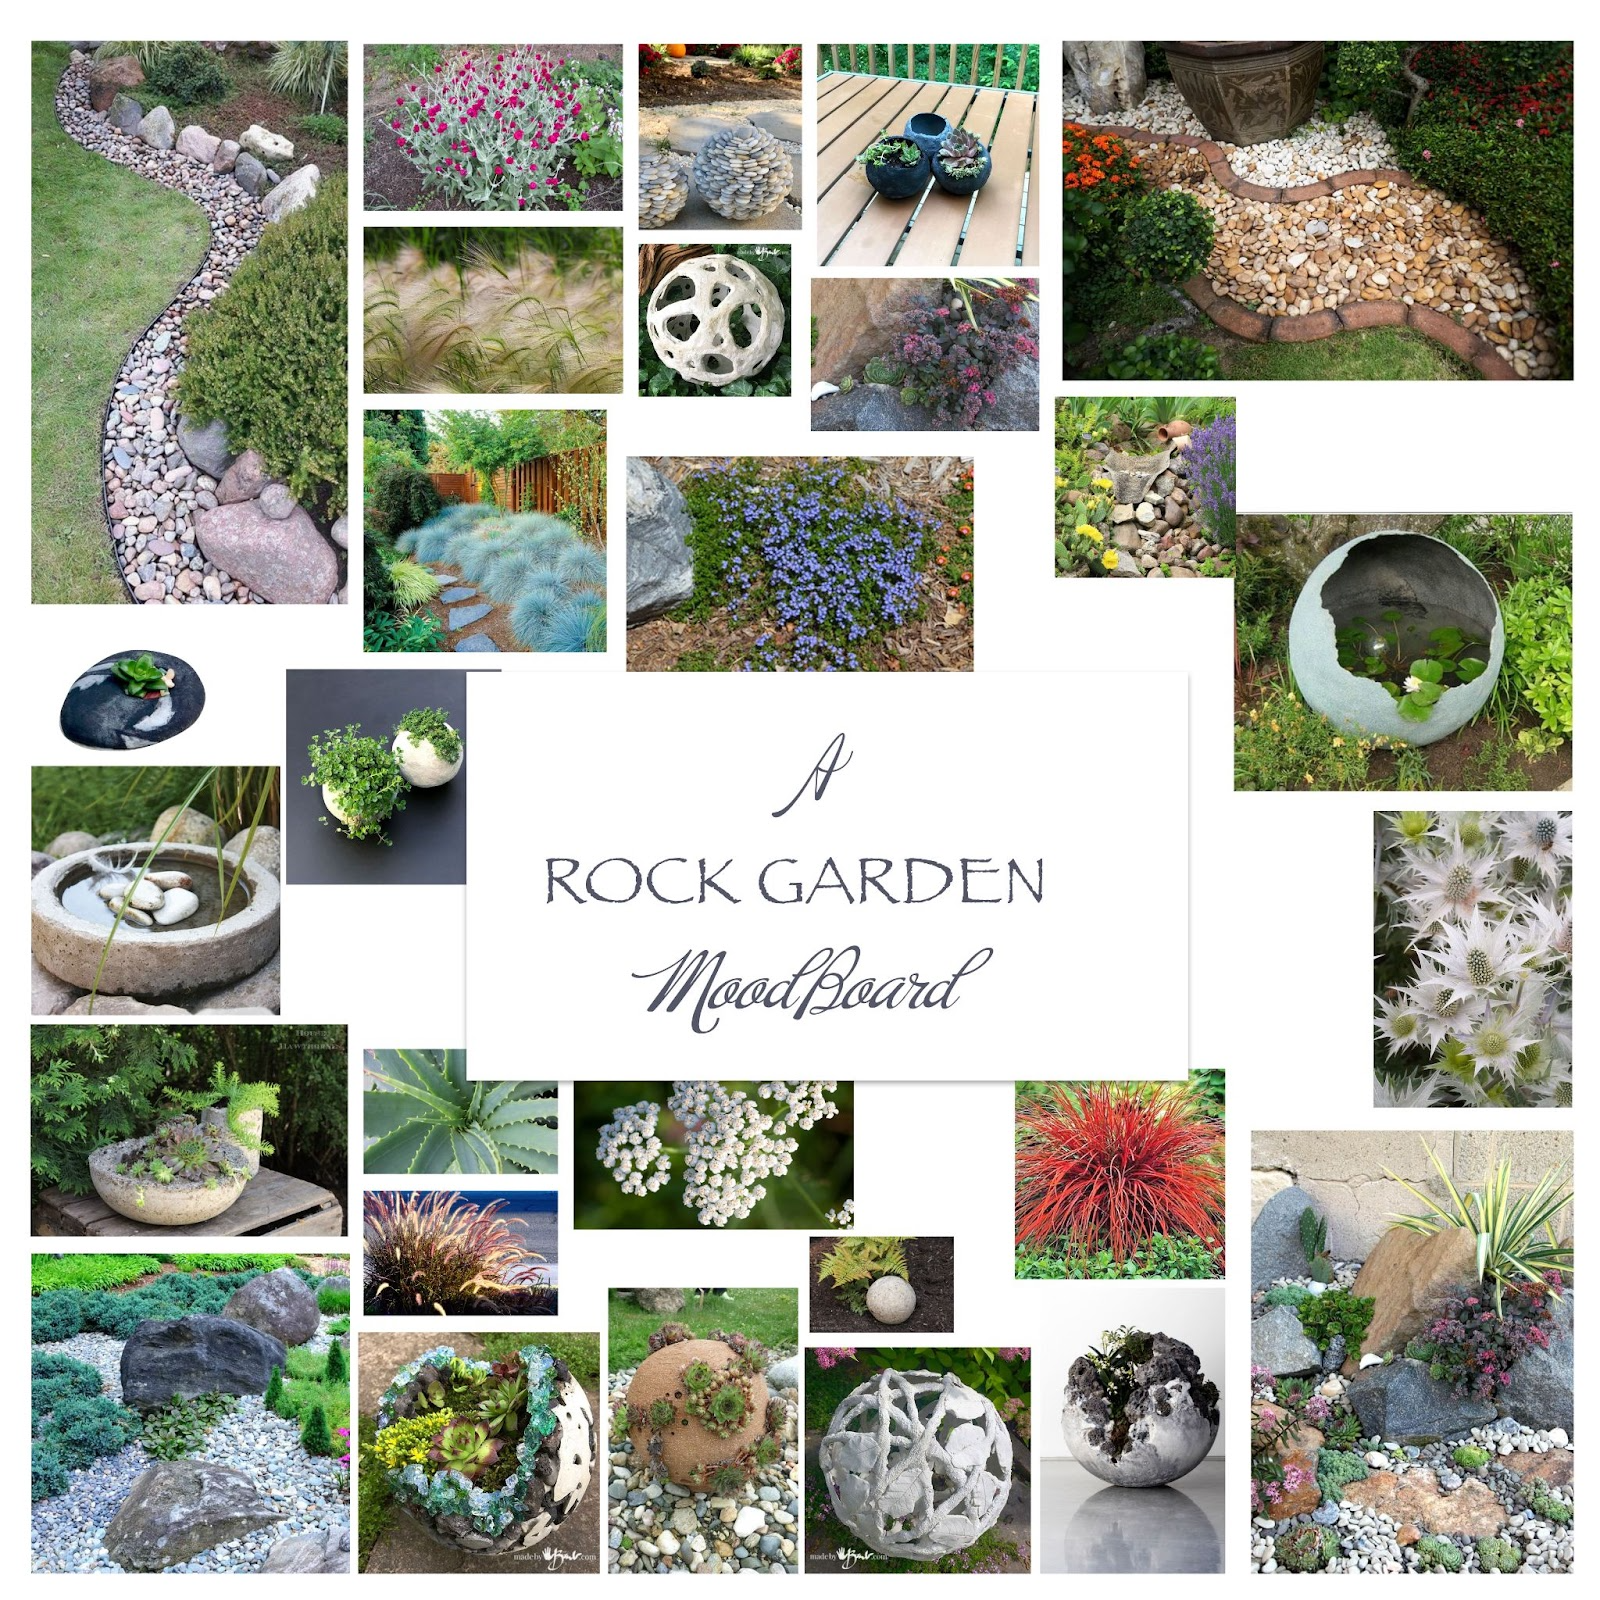 A Rock Garden in Colorado